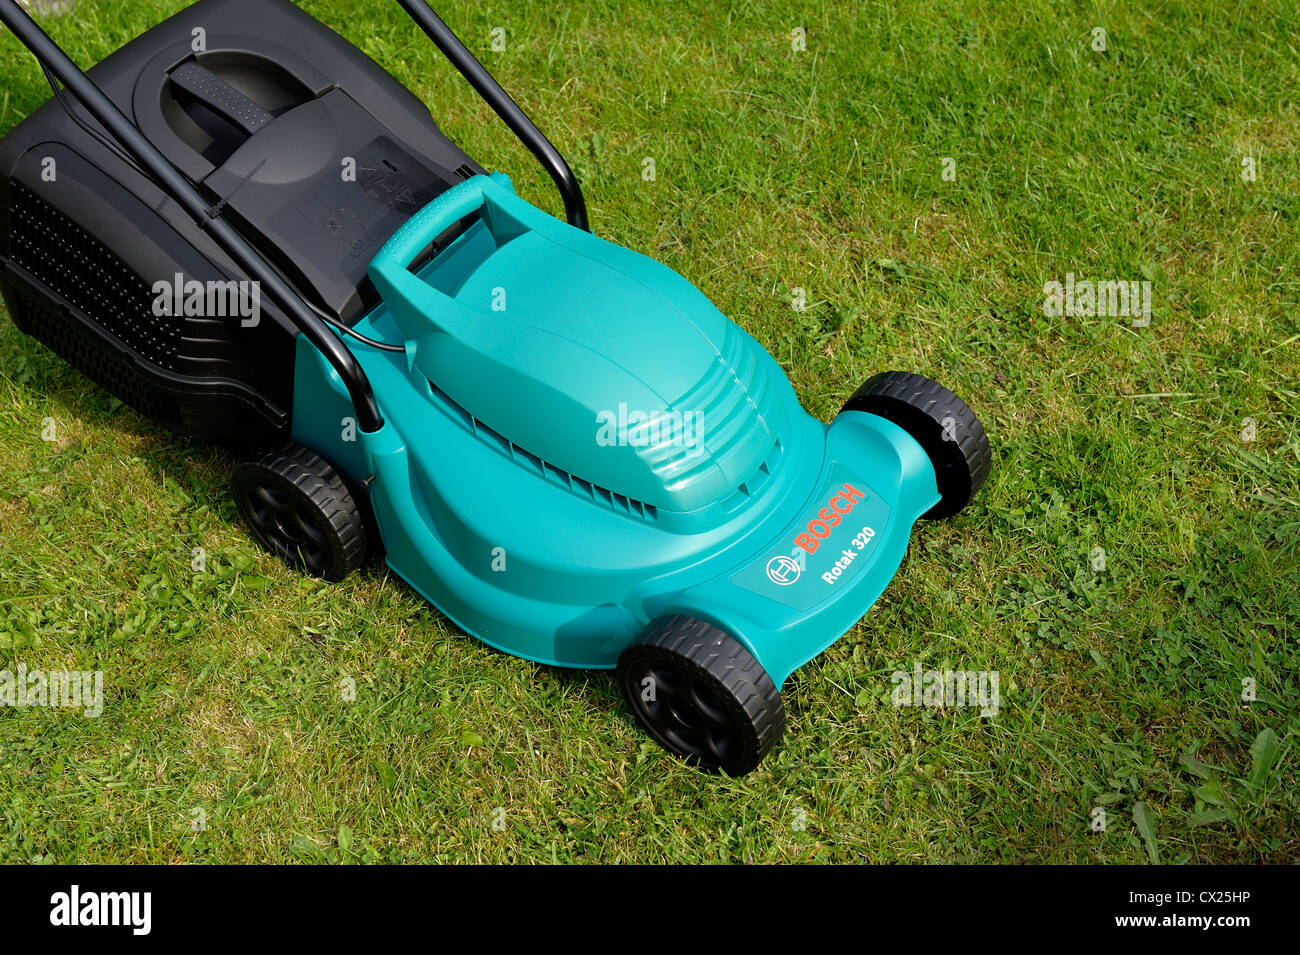 bosch rotak 320 electric rotary lawnmower Stock Photo - Alamy